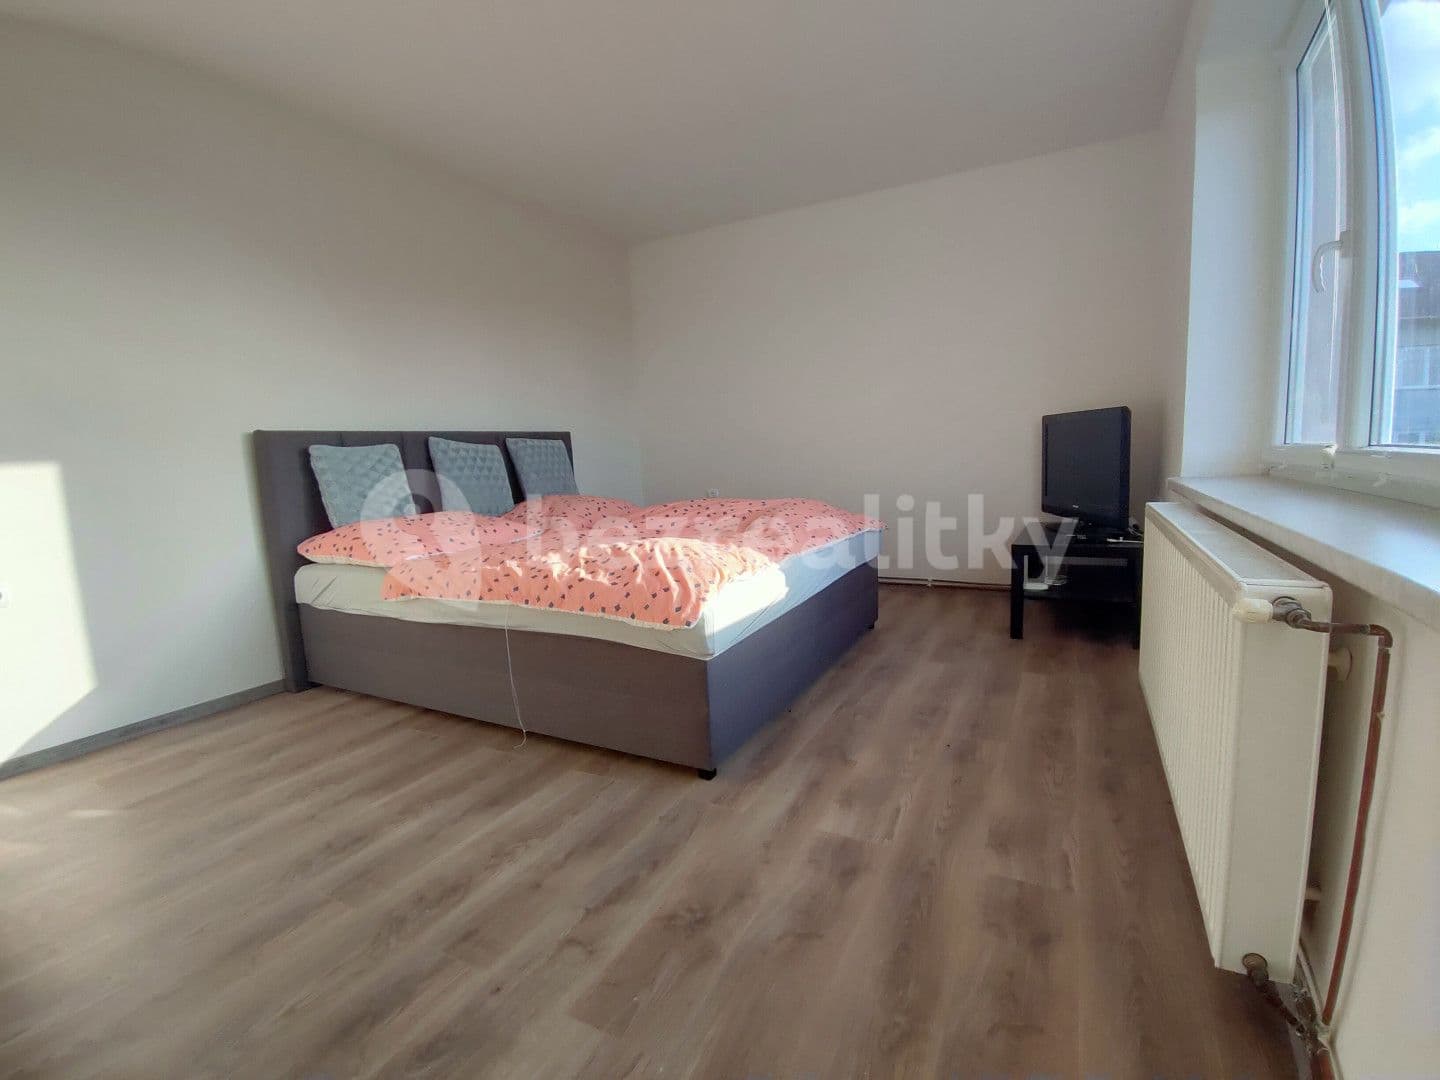 Predaj bytu 3-izbový 76 m², Sídliště 2, Sedlice, Jihočeský kraj